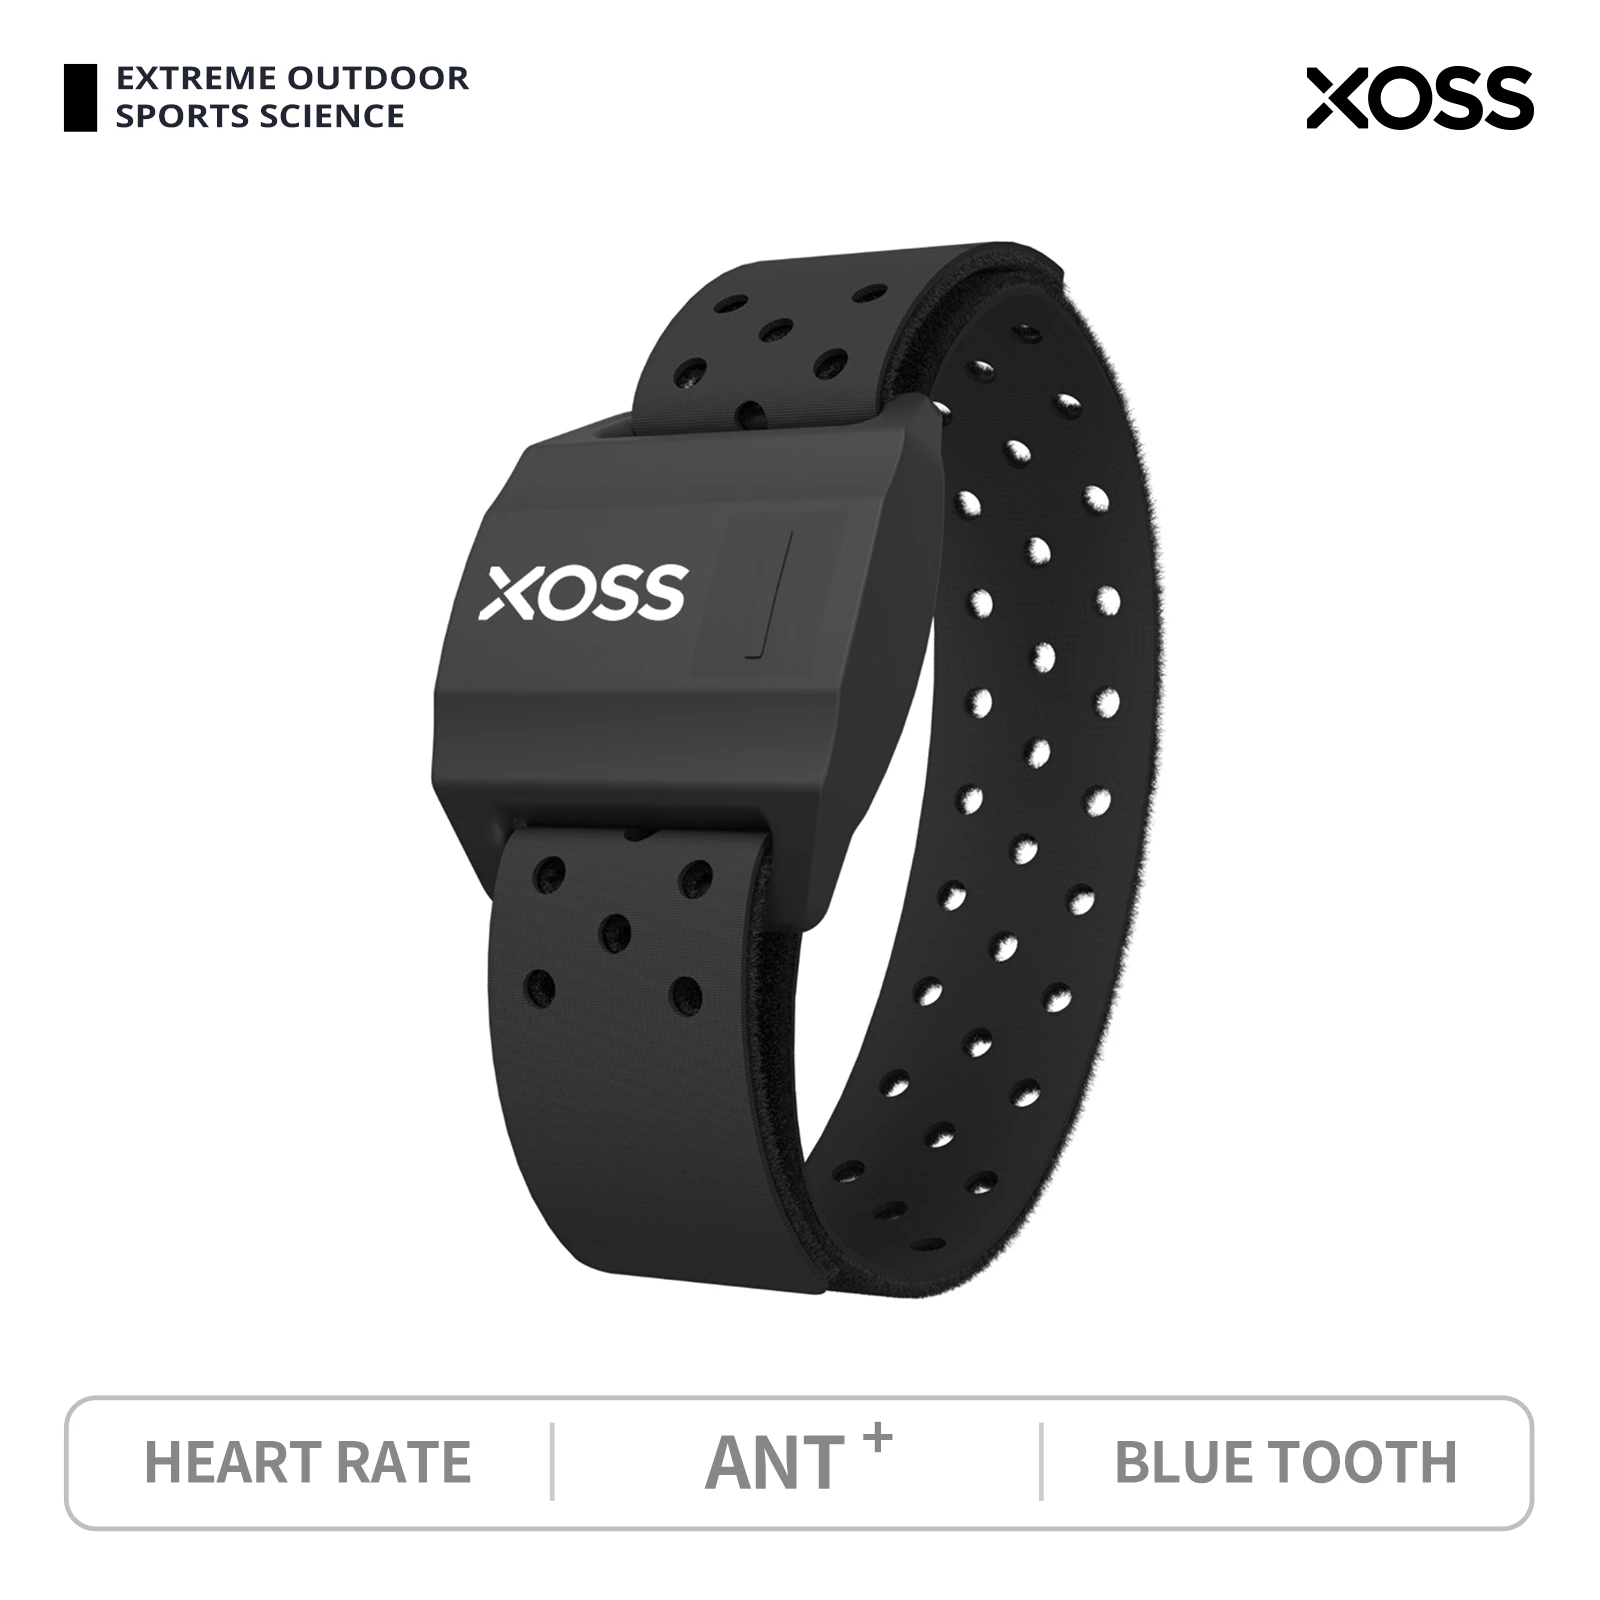 XOSS Armband Heart Rate Monitor Hand Strap Sensor Bluetooth ANT+ Wireless Health Fitness Smart Bicycle Sensor for GARMIN